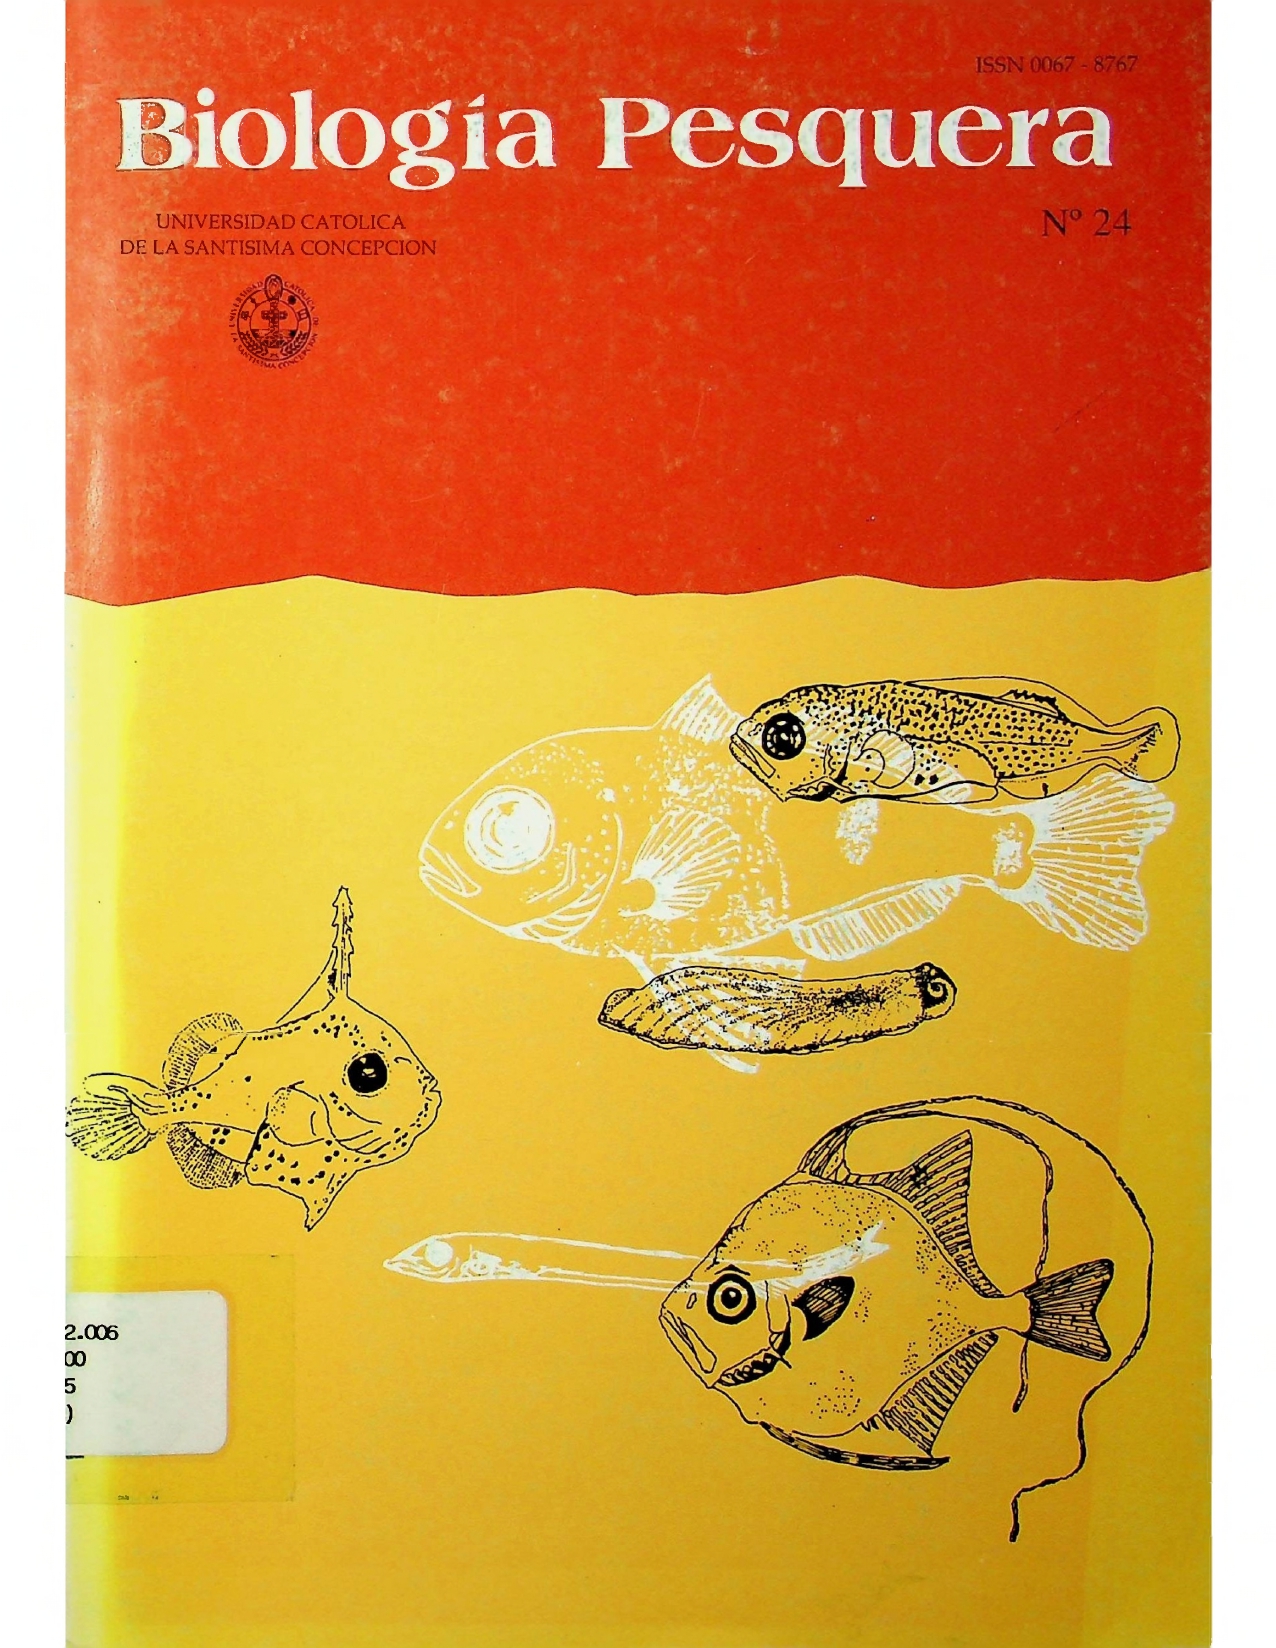 					Ver Núm. 24 (1995): Biología Pesquera
				